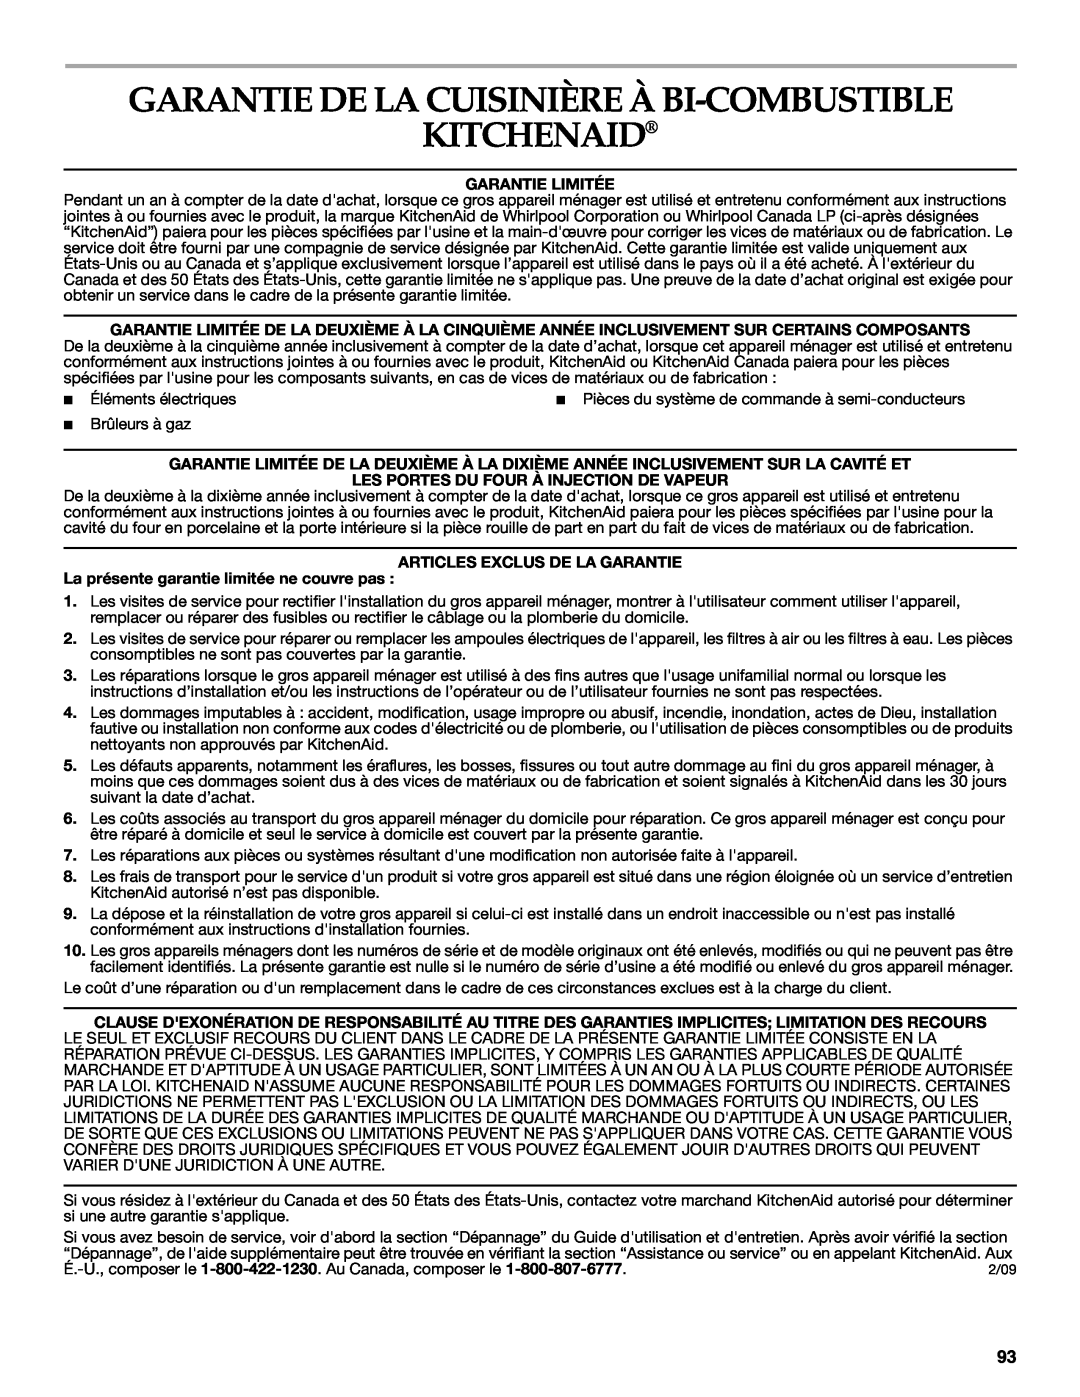 KitchenAid KDRU763.KDRU manual Garantie De La Cuisinière À Bi-Combustible Kitchenaid, Garantie Limitée 